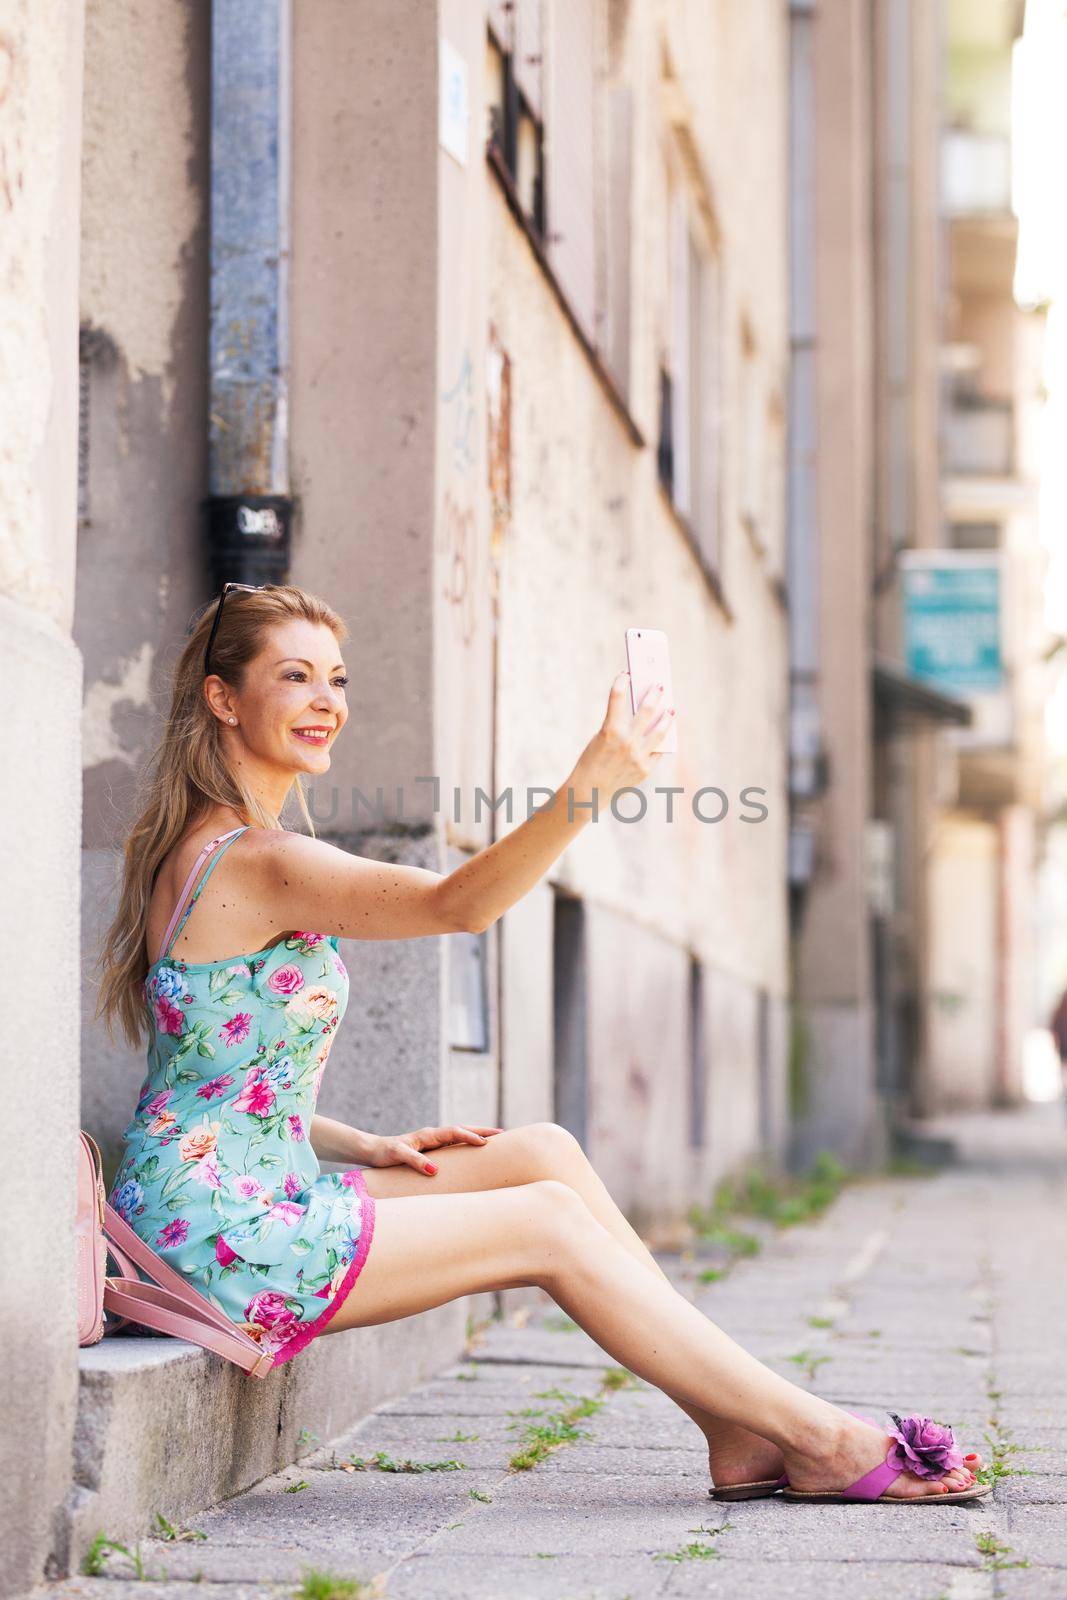 girl sitting on the sidewalk taking selfie photo with her phone by kokimk